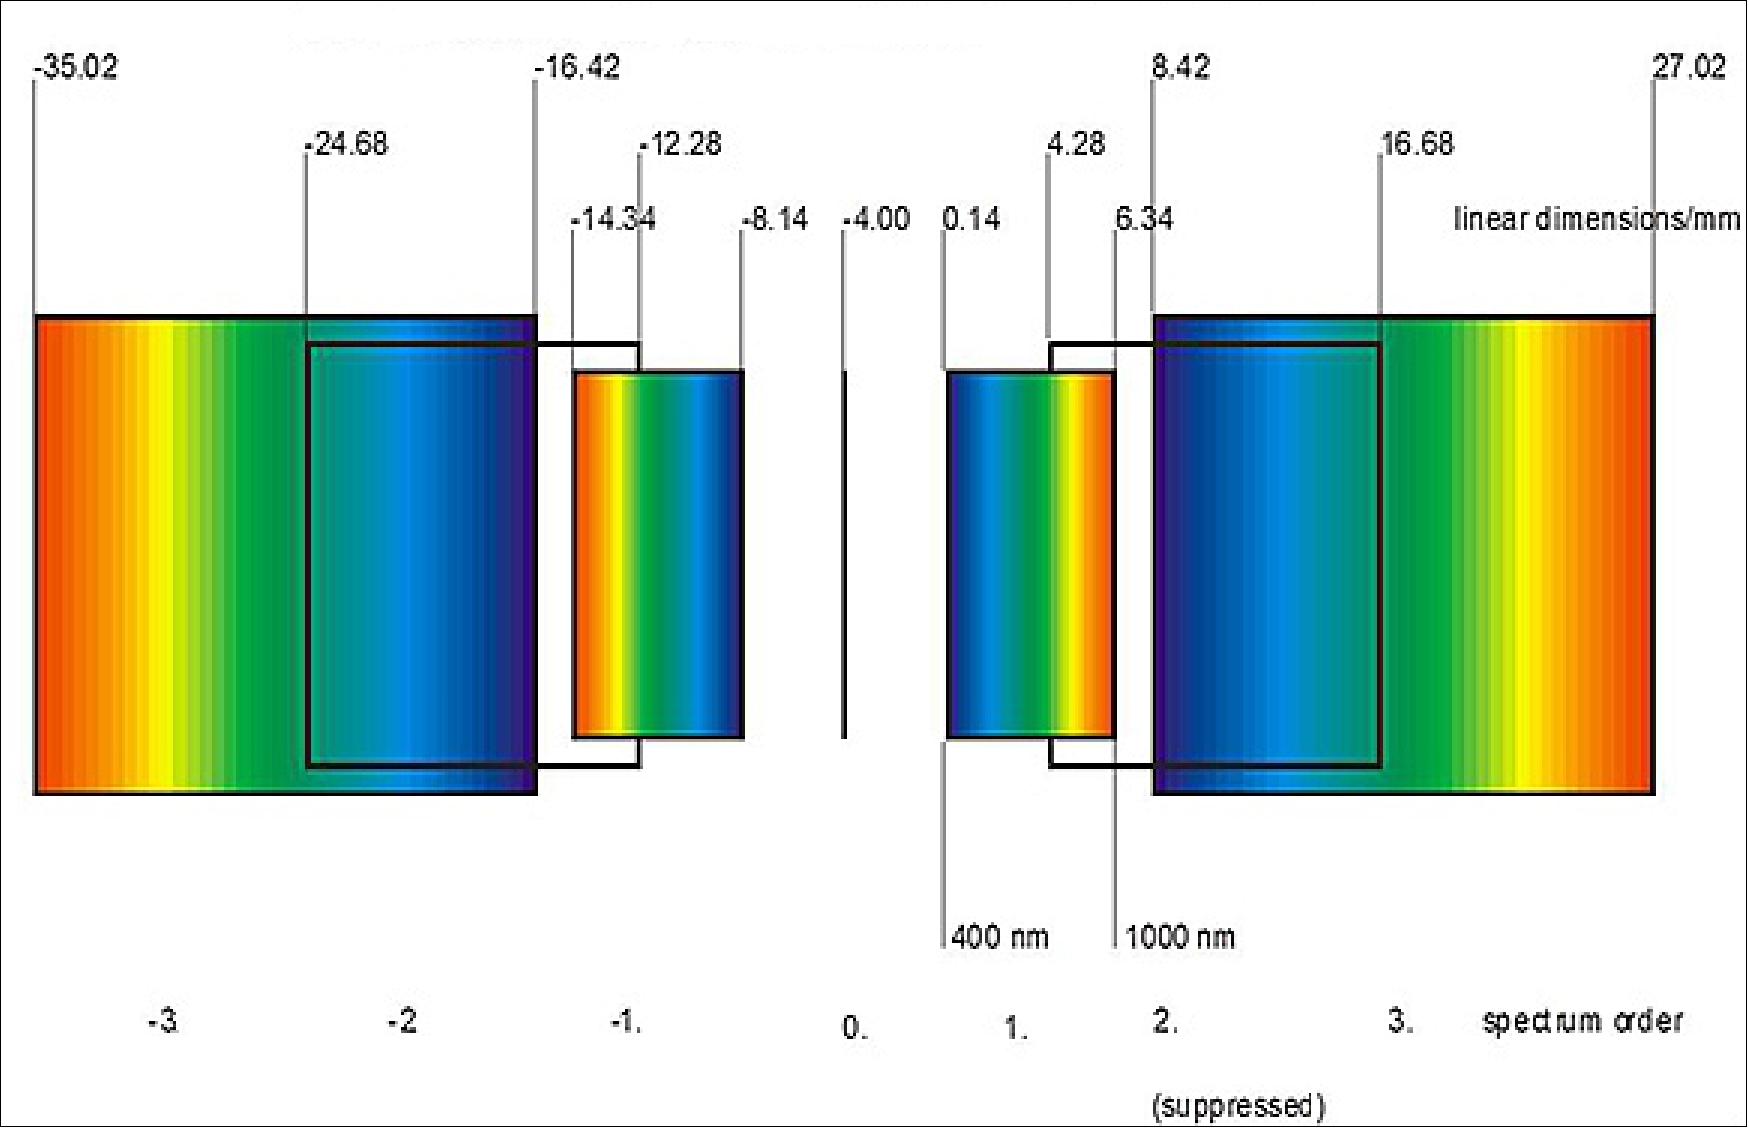 Figure 9: Offner spectrometer: Focal plane, linear dimensions, second order spectrum suppressed (image credit: DLR)